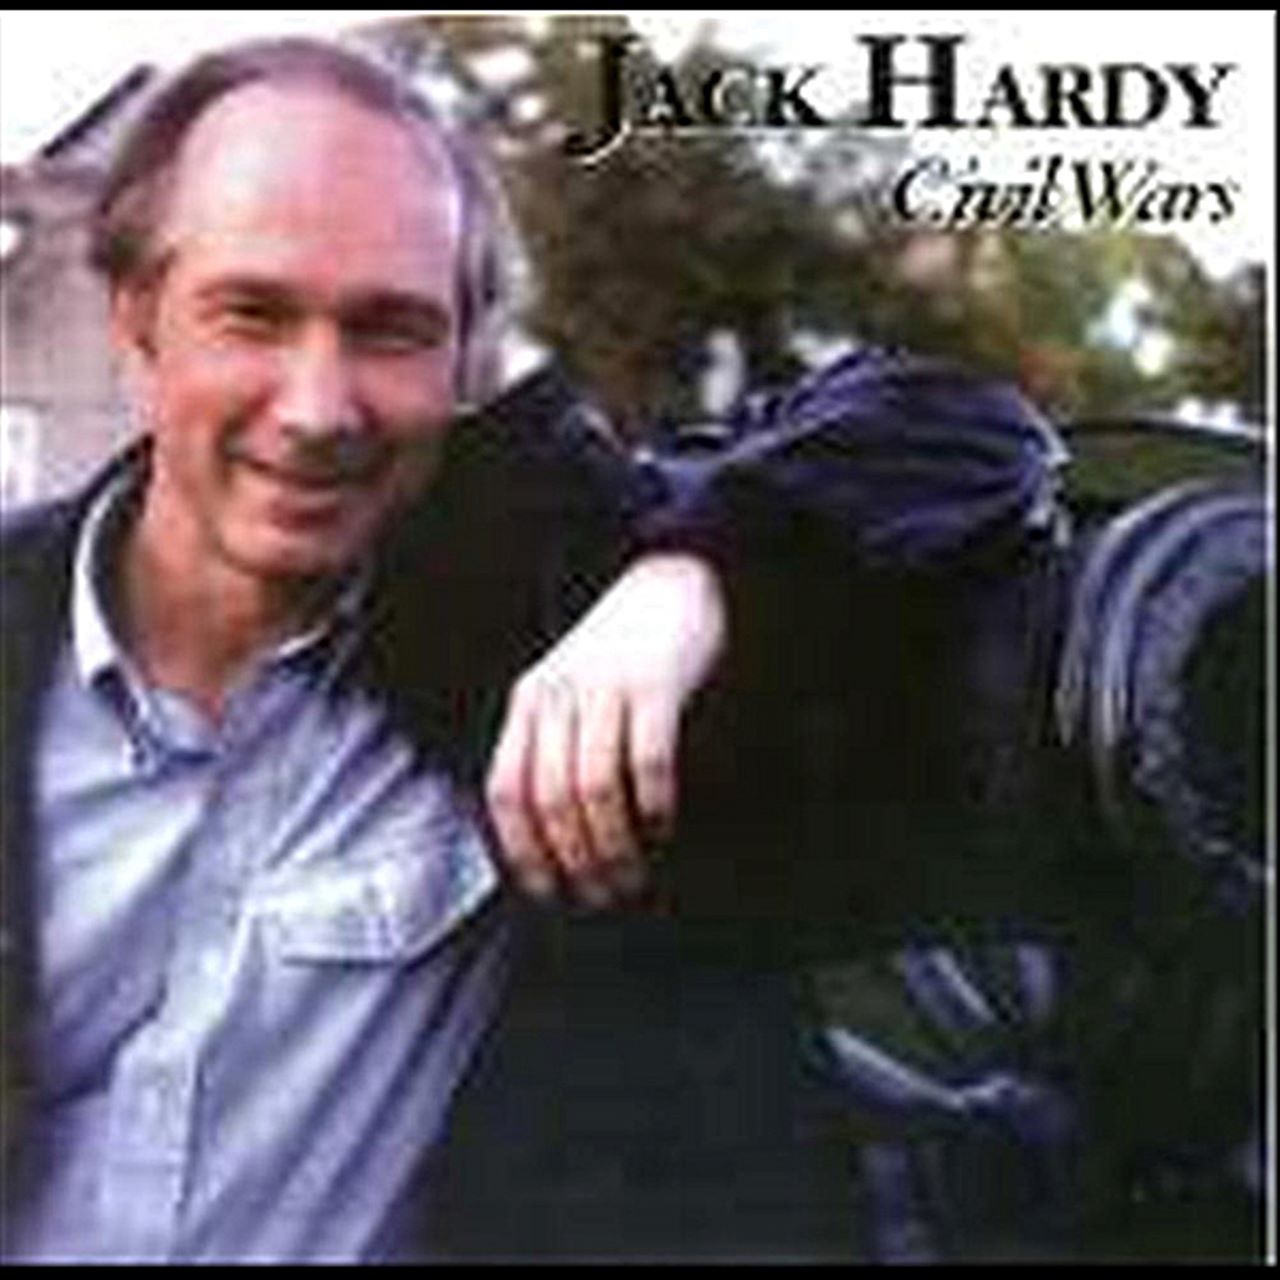 Jack Hardy - Civil Wars cover album